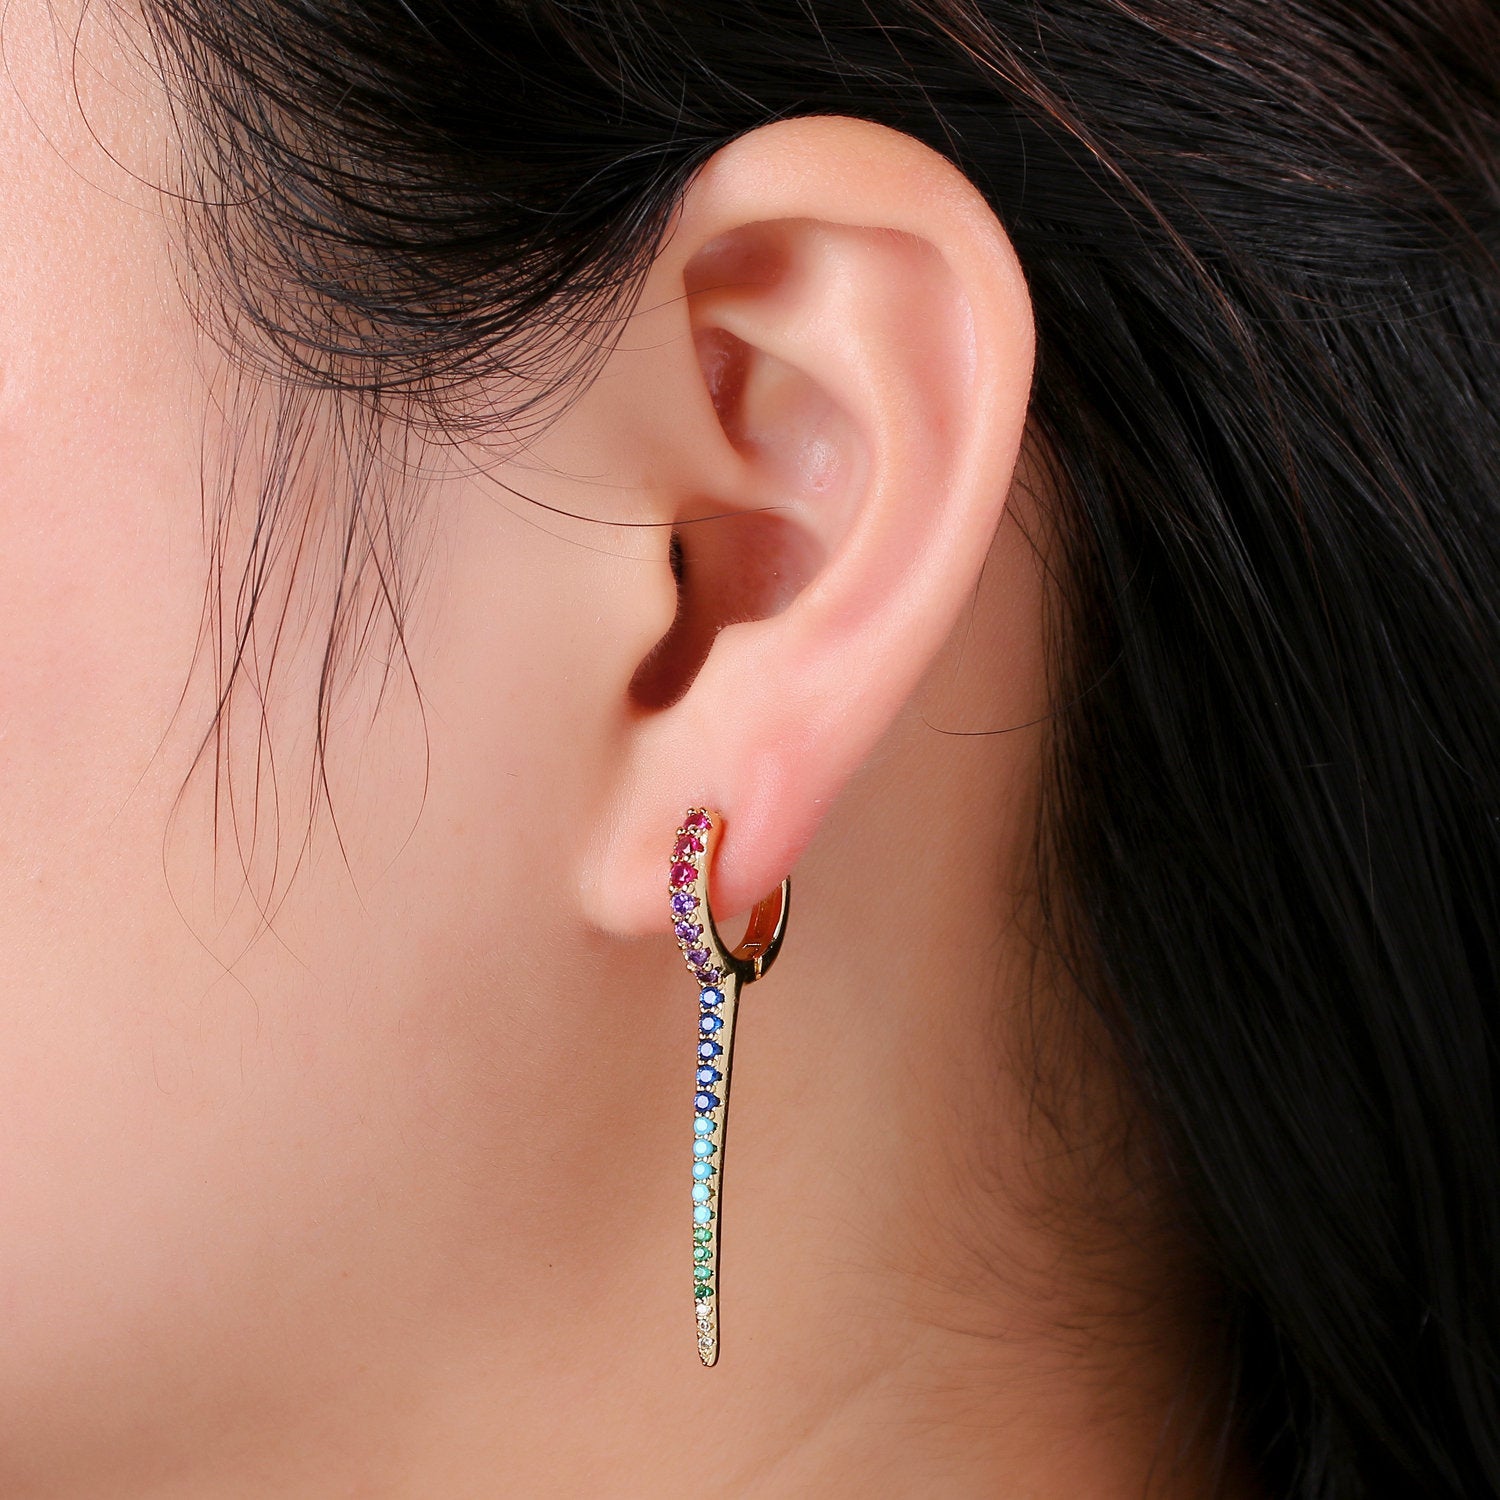 Dainty Huggie earrings, spike earrings, Multi Color hoop earrings, Long Gold Micro Pave Spike Earring Minimal Jewelry, EARRING-1141/1147 - DLUXCA